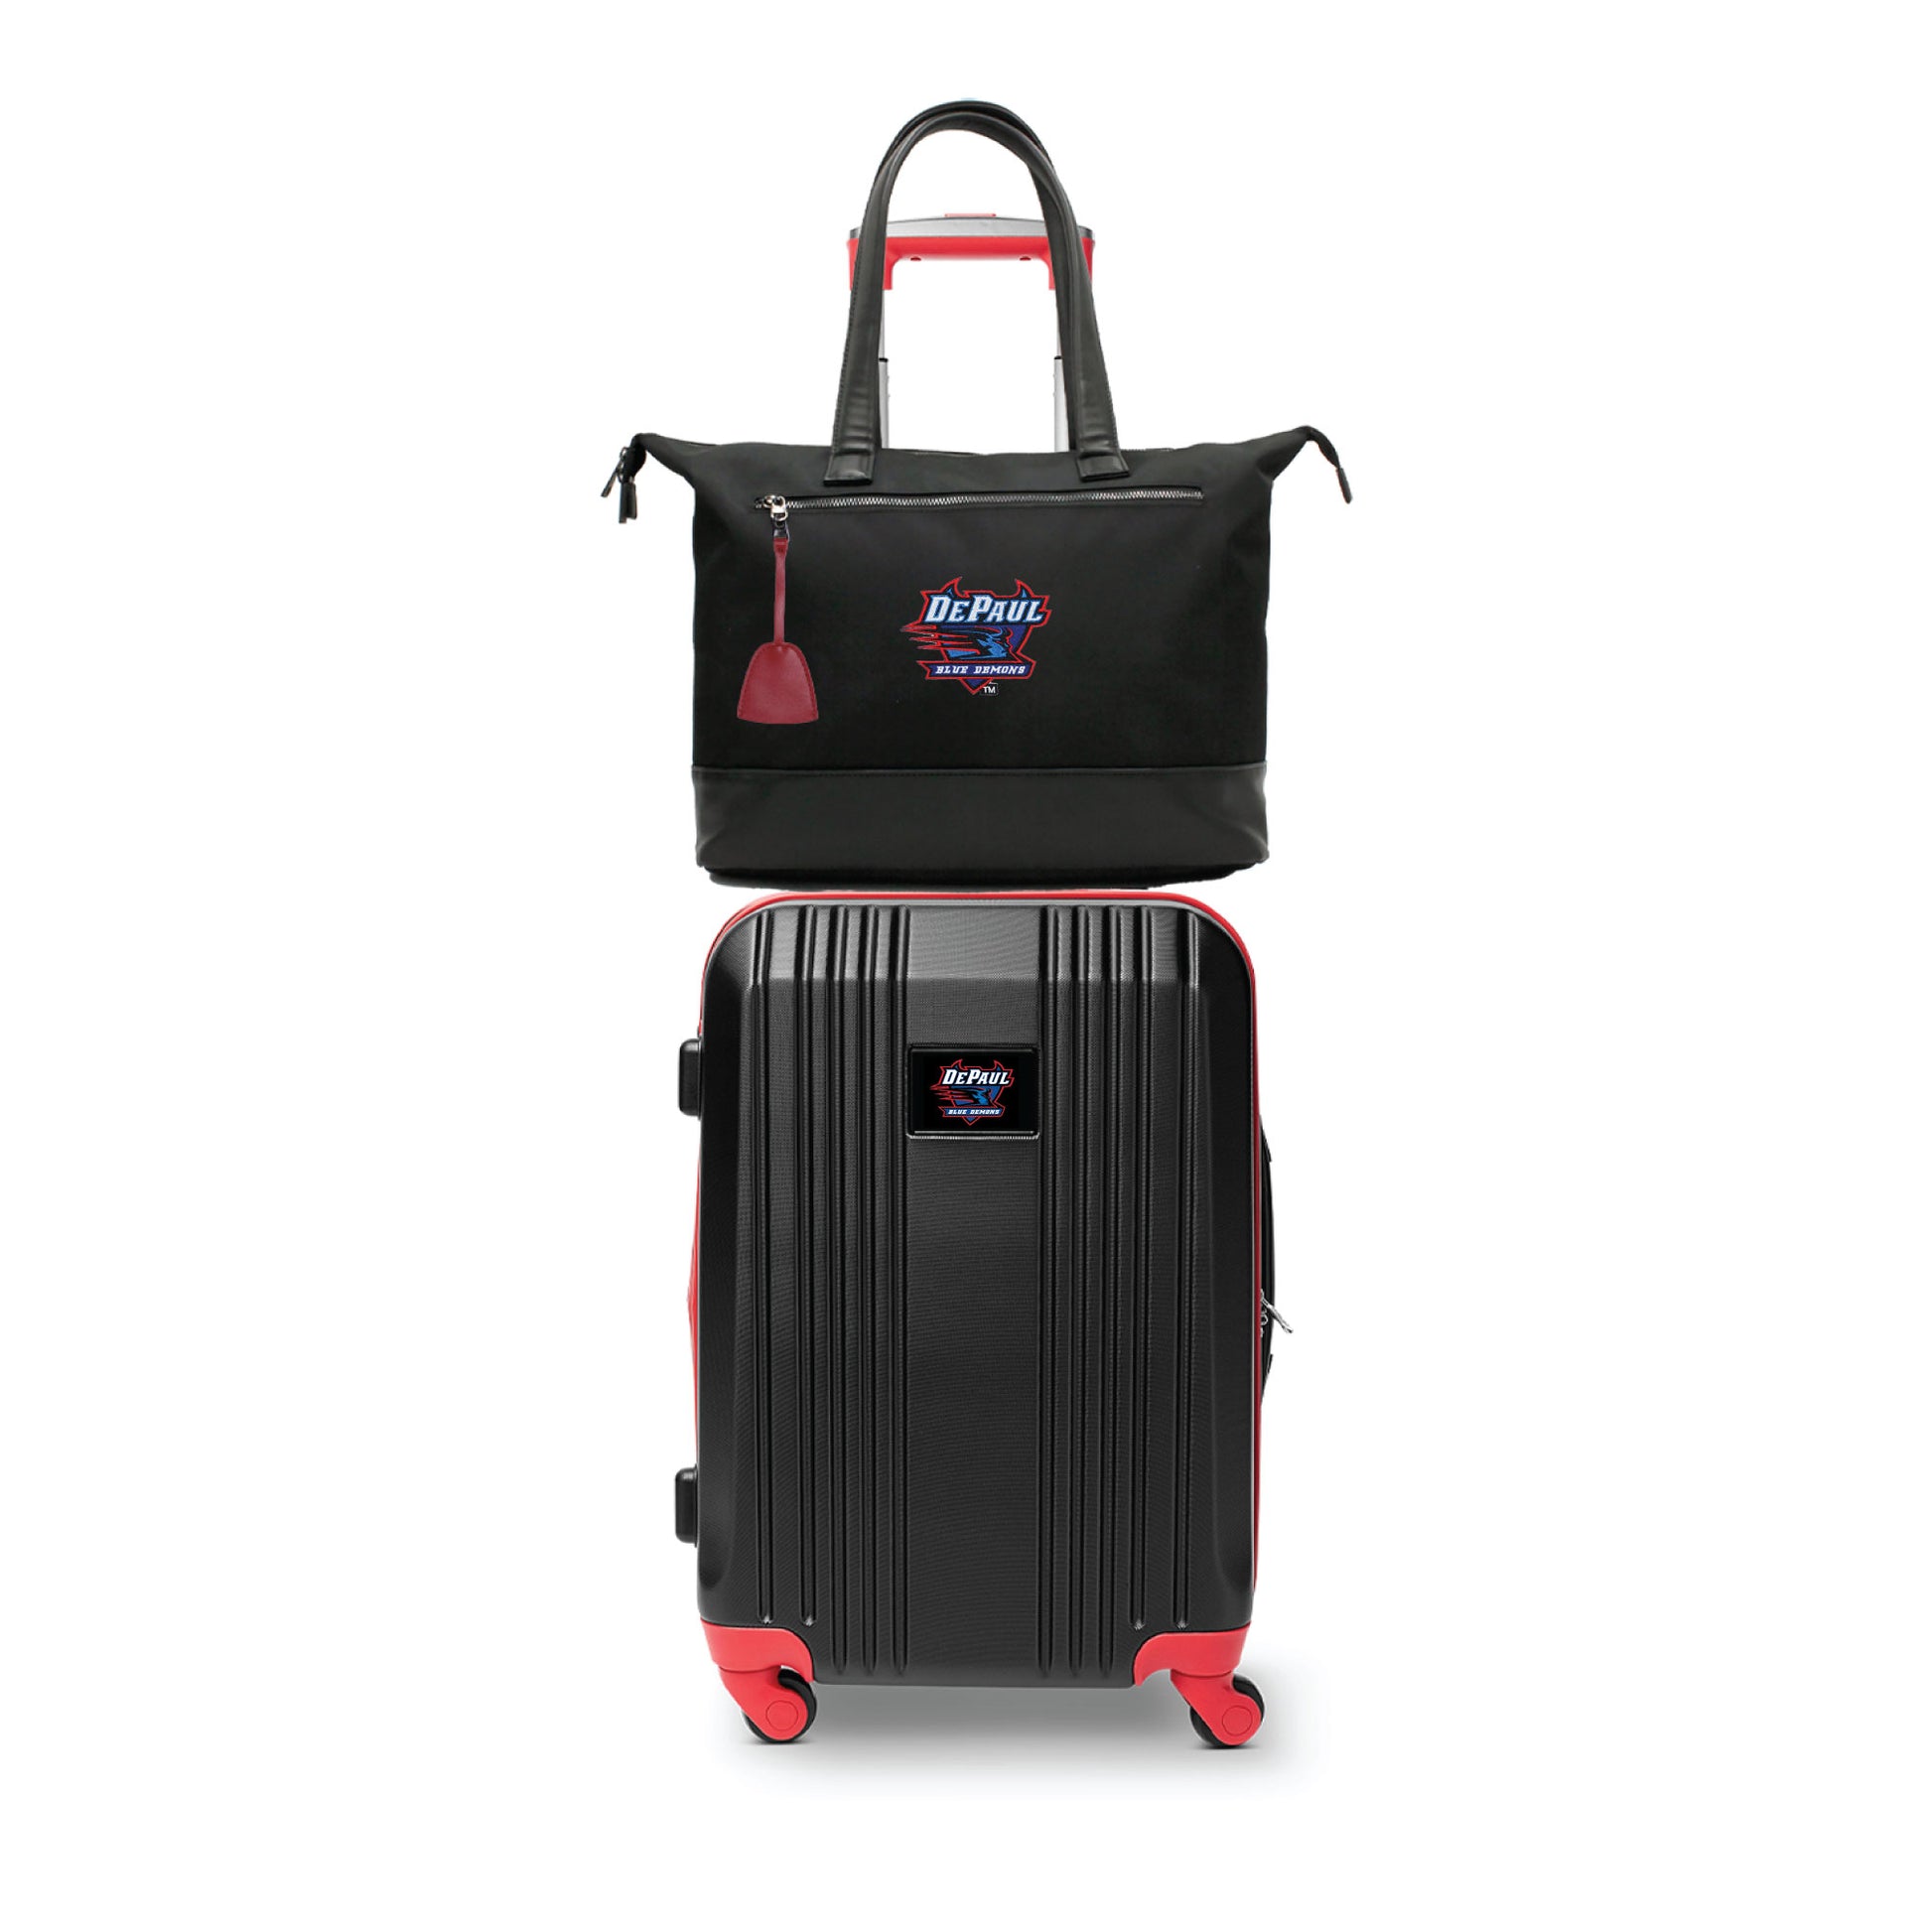 Depaul Blue Demons Premium Laptop Tote Bag and Luggage Set